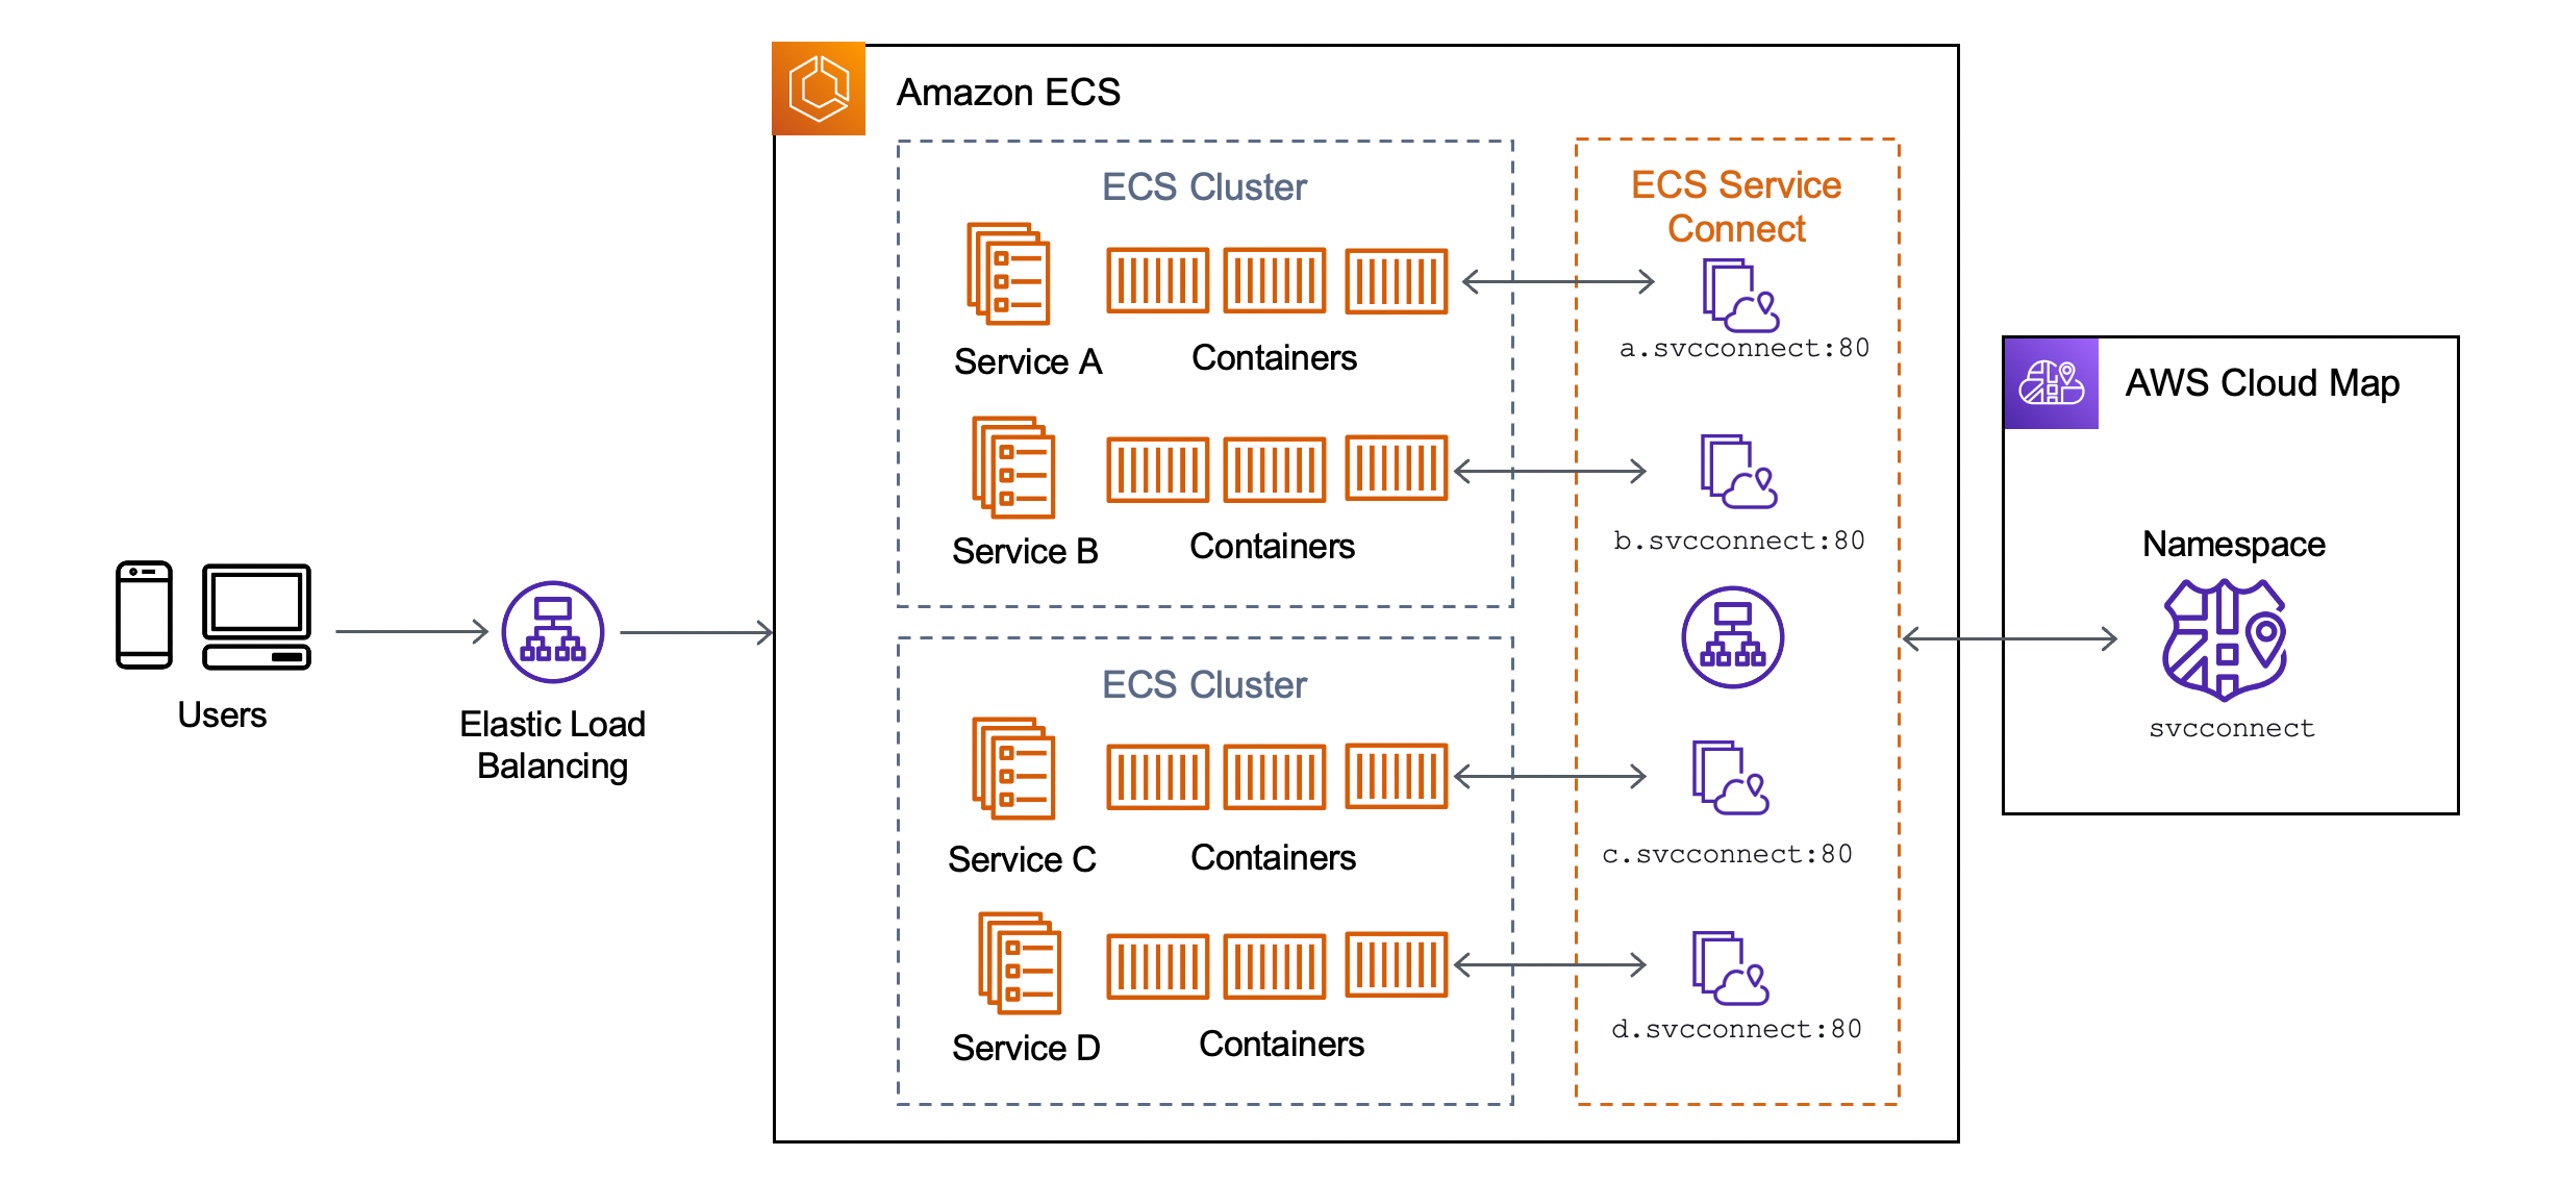 Amazon ECS Service Connect 